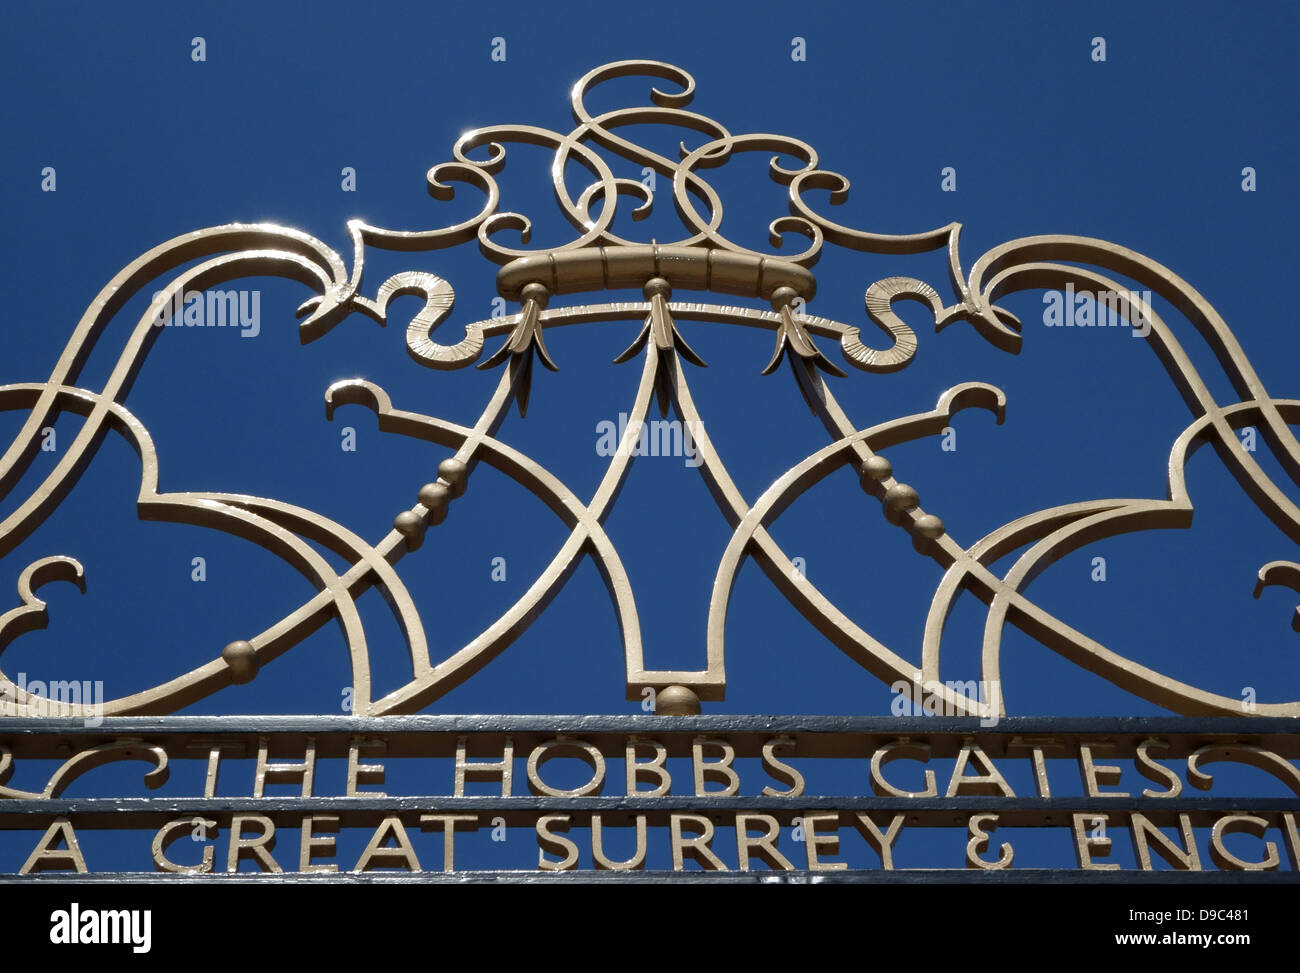 Hobbs Gates at Oval cricket ground, London Stock Photo